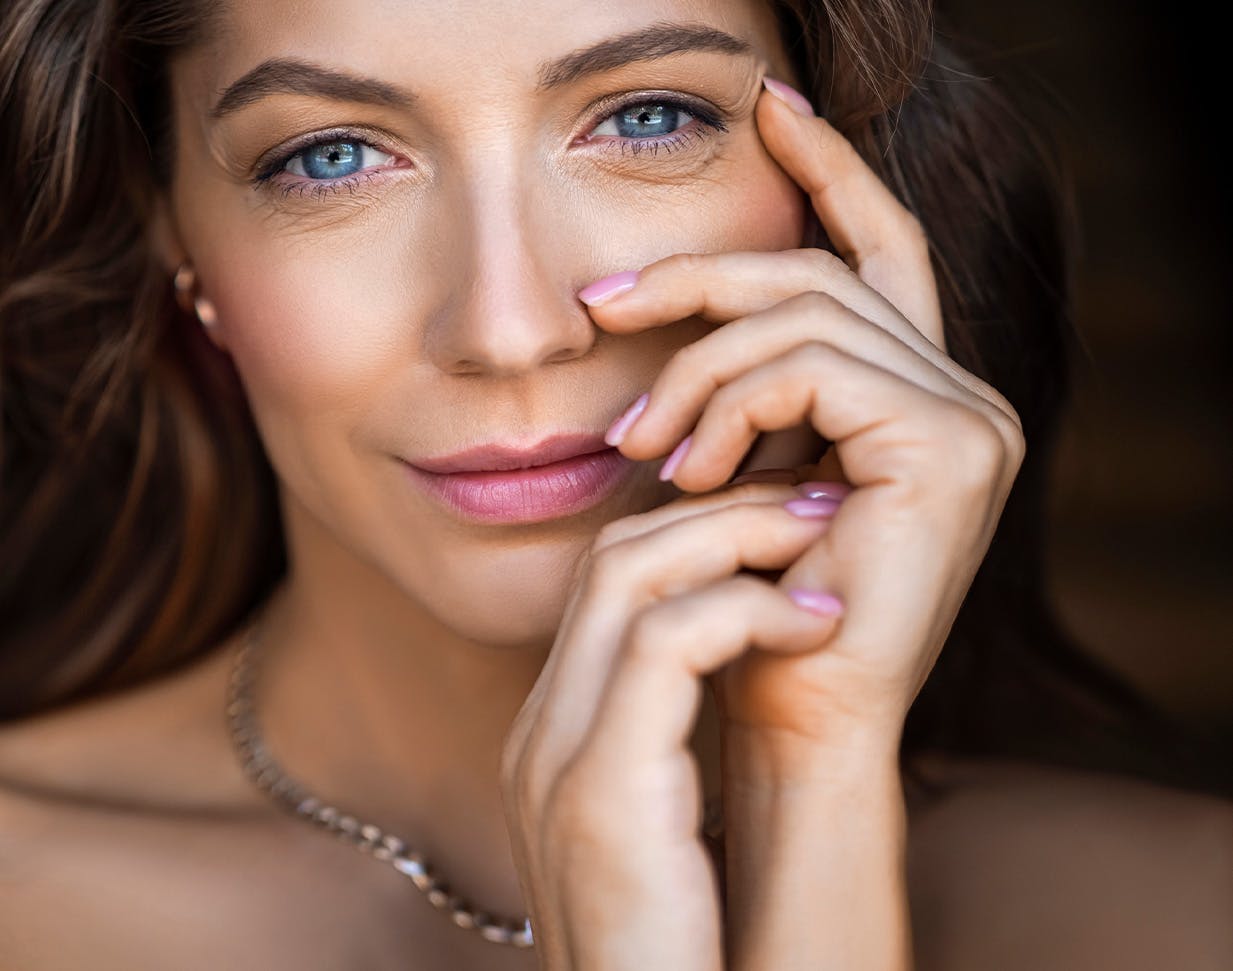 Woman with blue eyes and pink nail polish